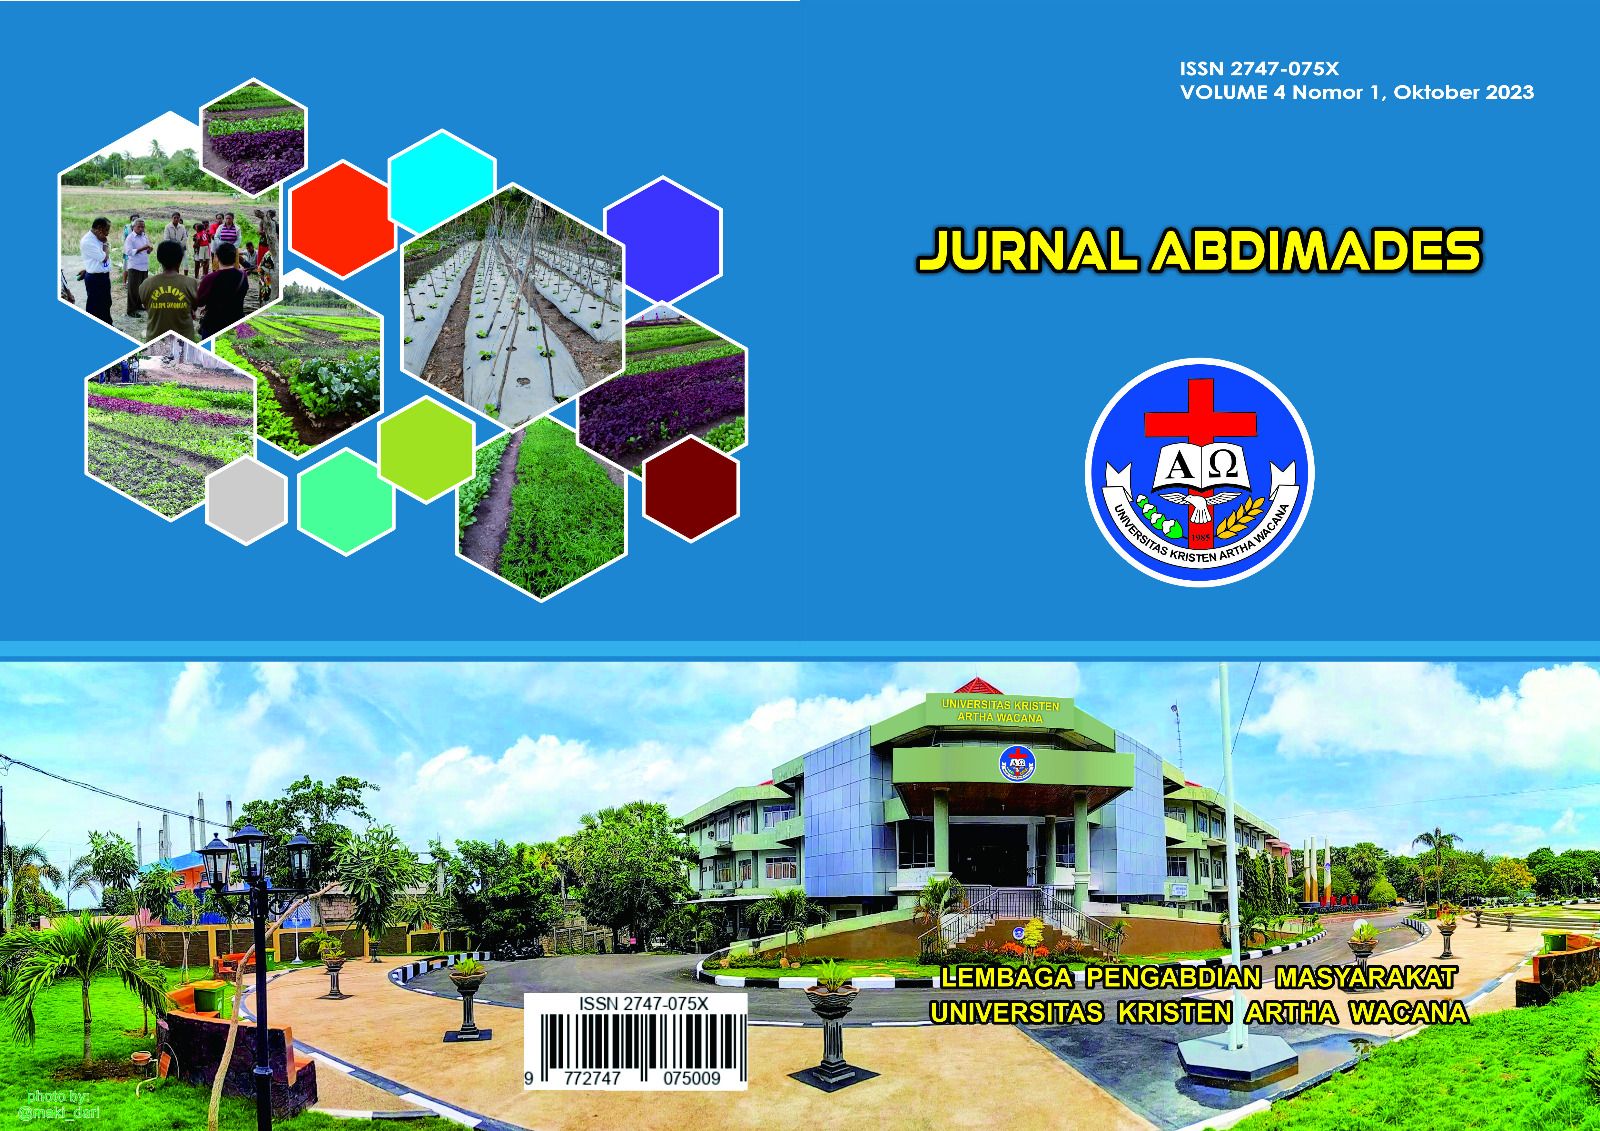 					Lihat Vol 4 No 1 (2023): JURNAL ABDIMADES ISSN 2747-075X
				